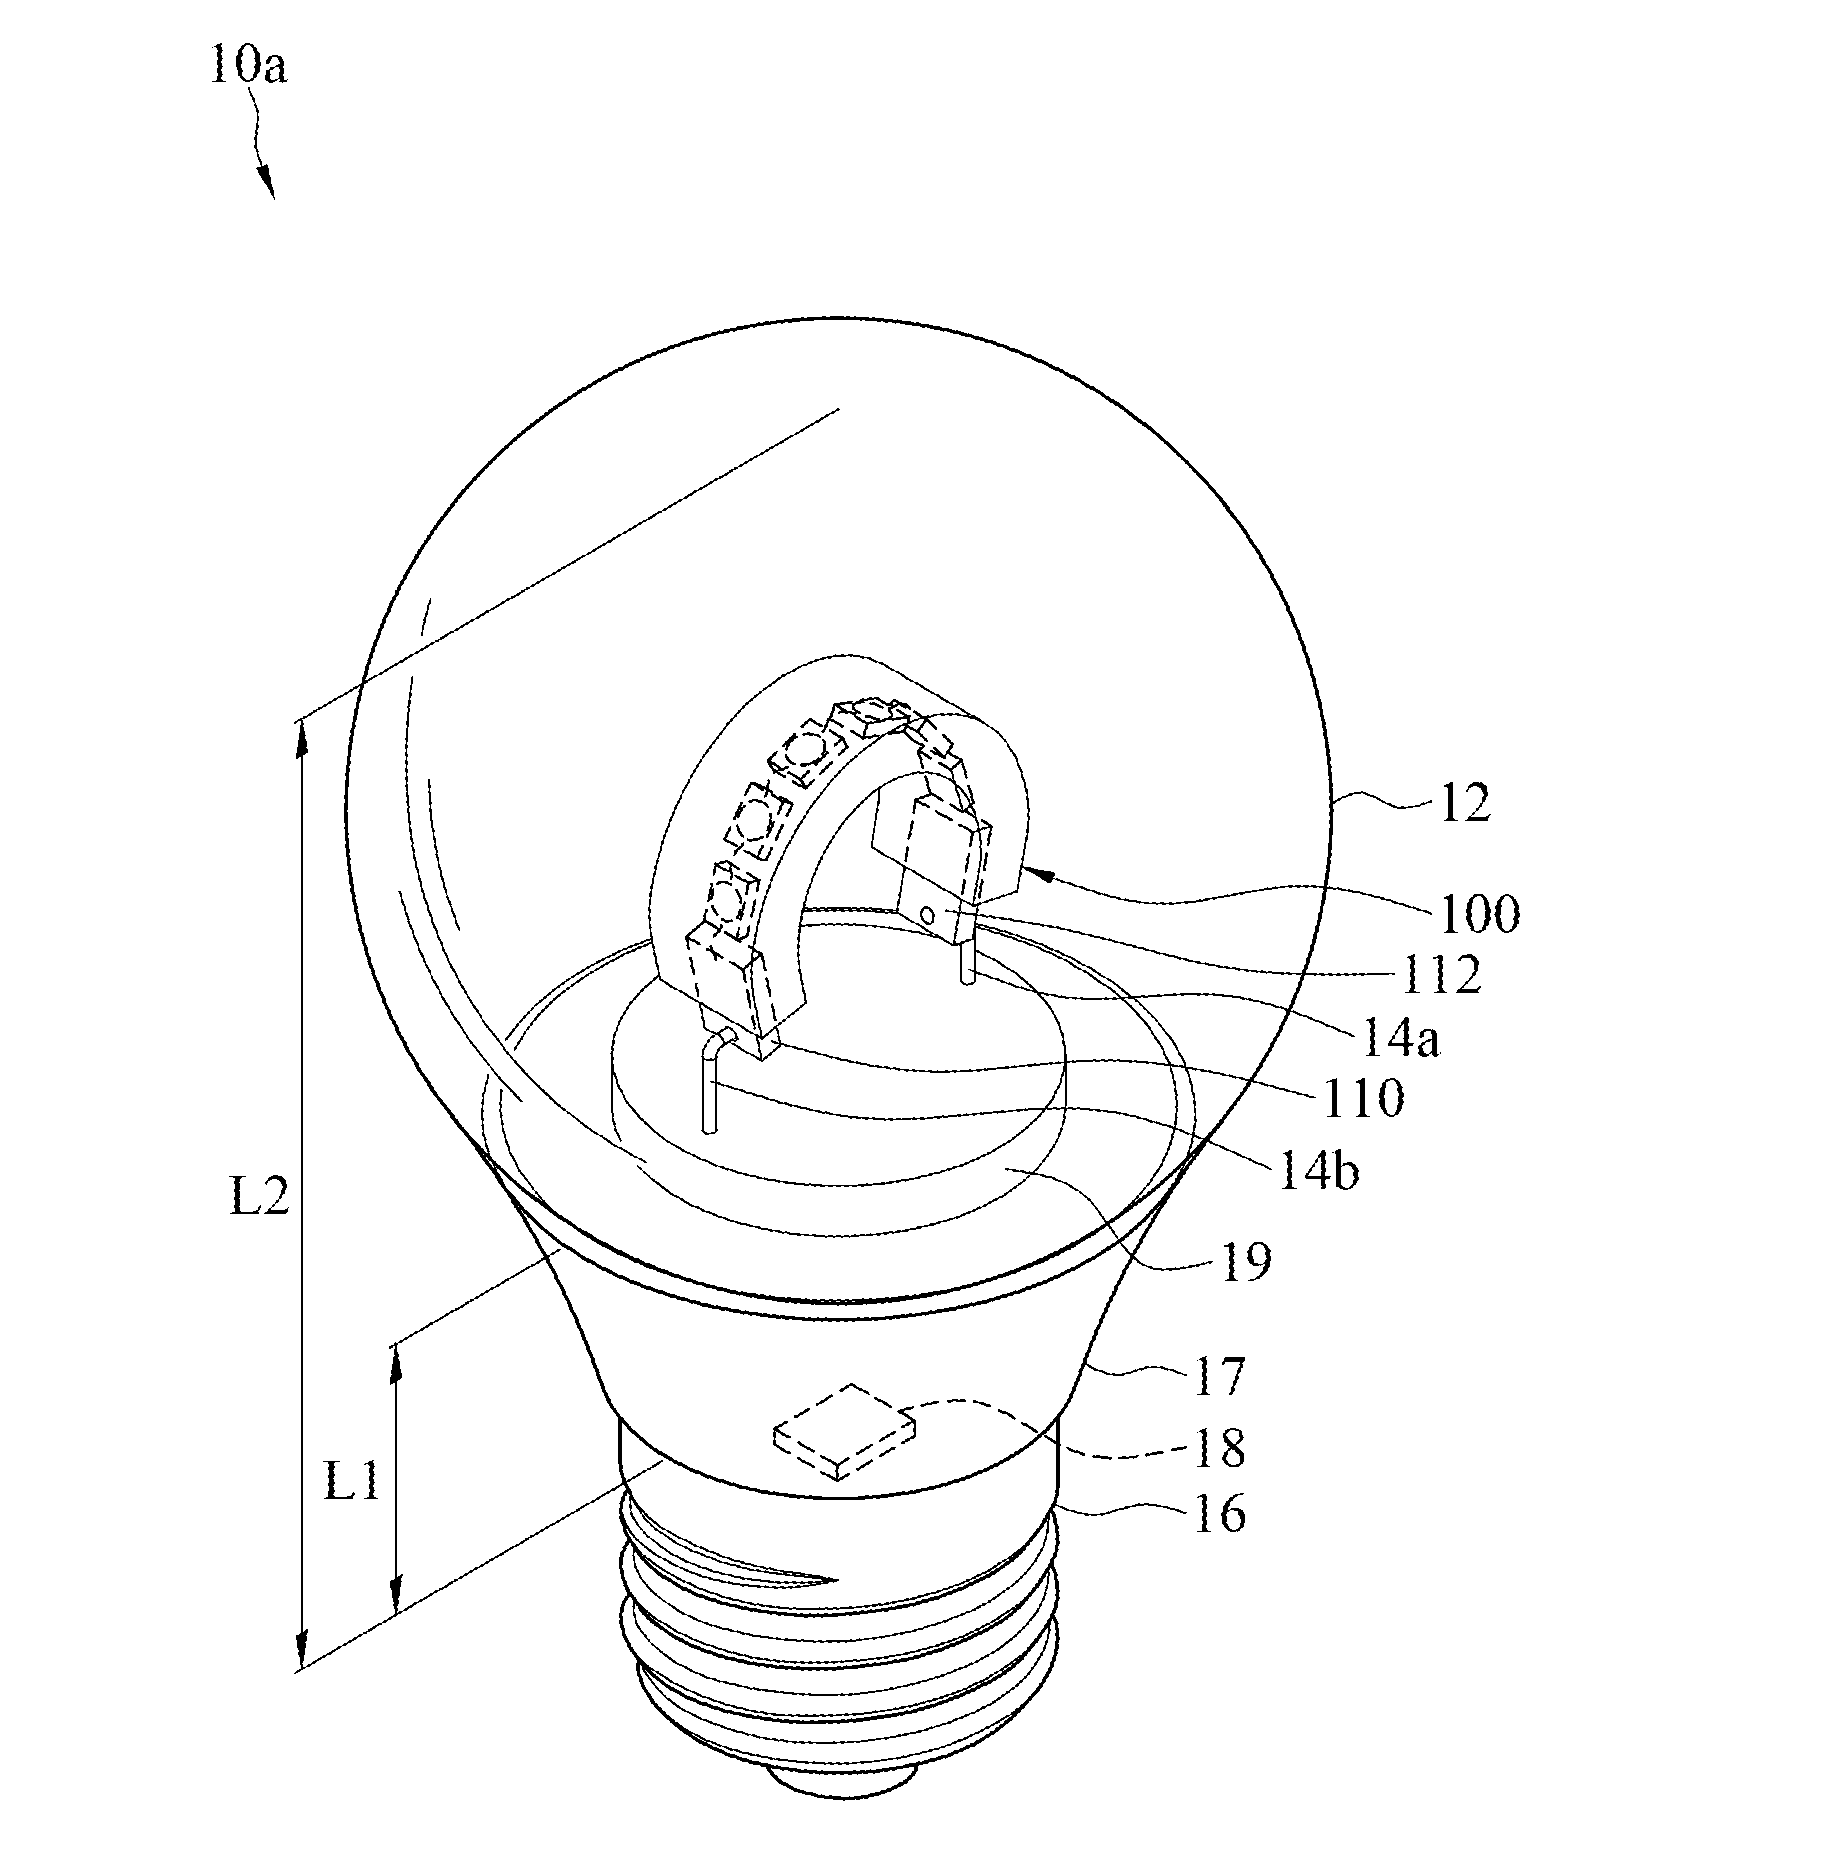 LED light bulb and LED filament thereof